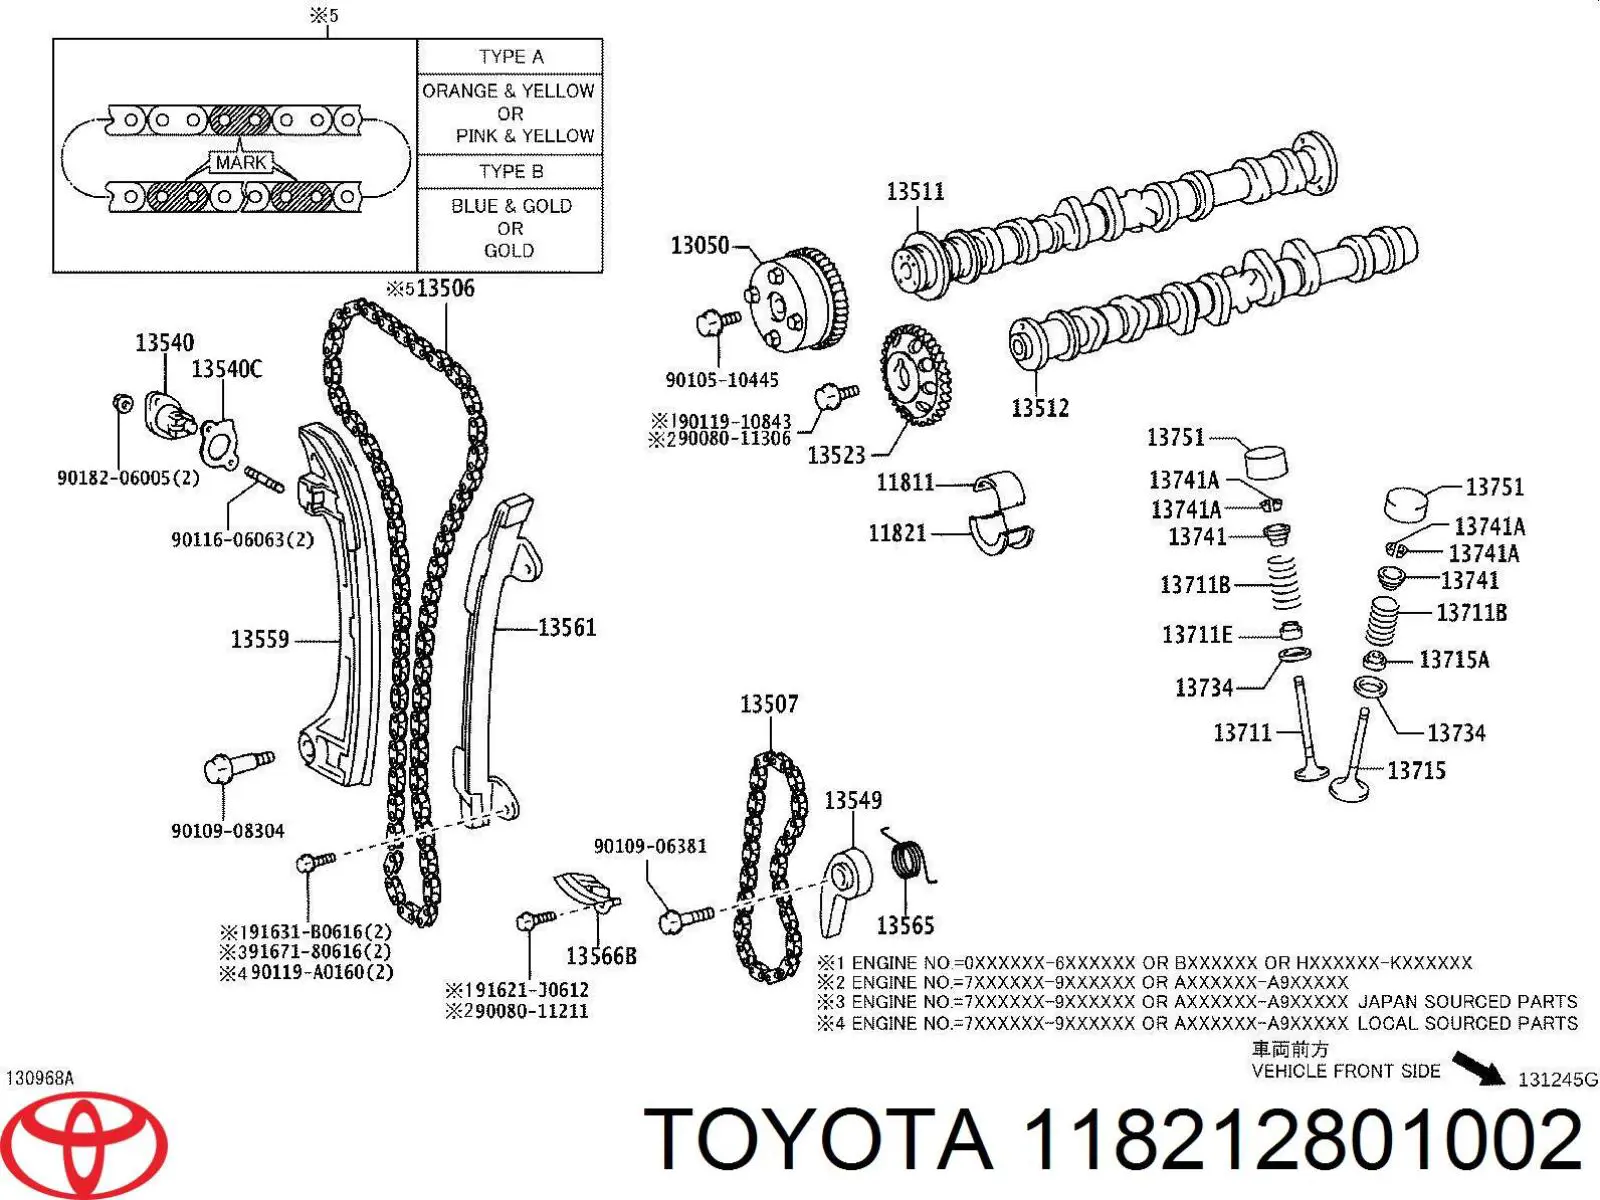 118212801002 Toyota вкладыш распредвала на одну шейку, стандарт